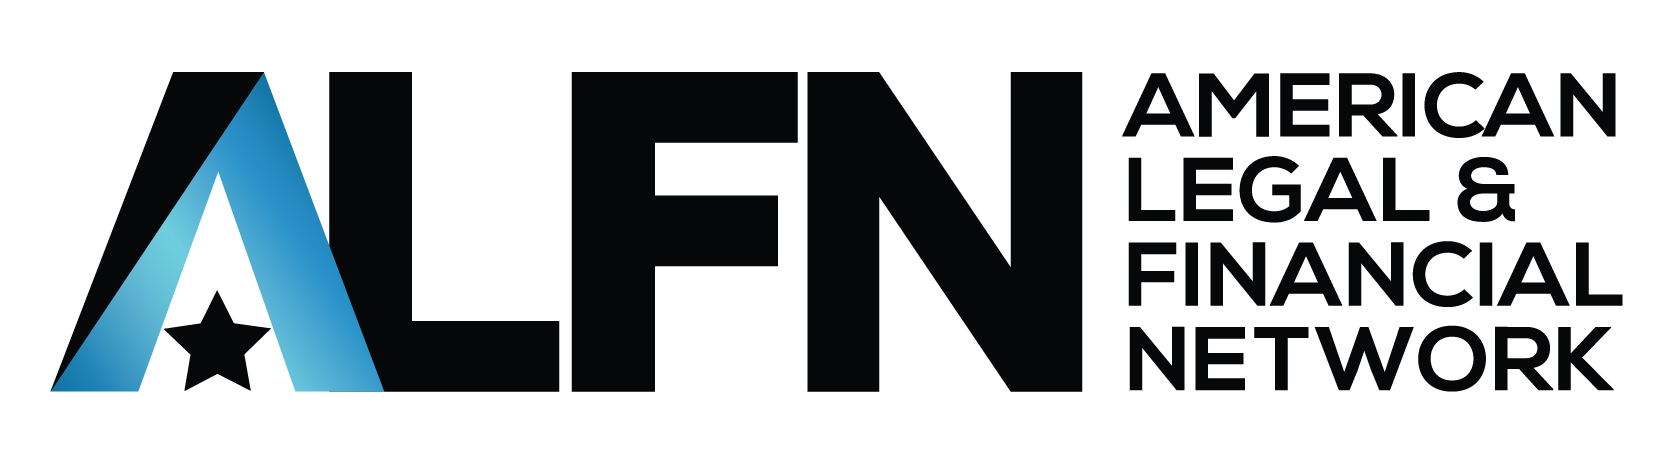 ALFN_New_Logo-15.png